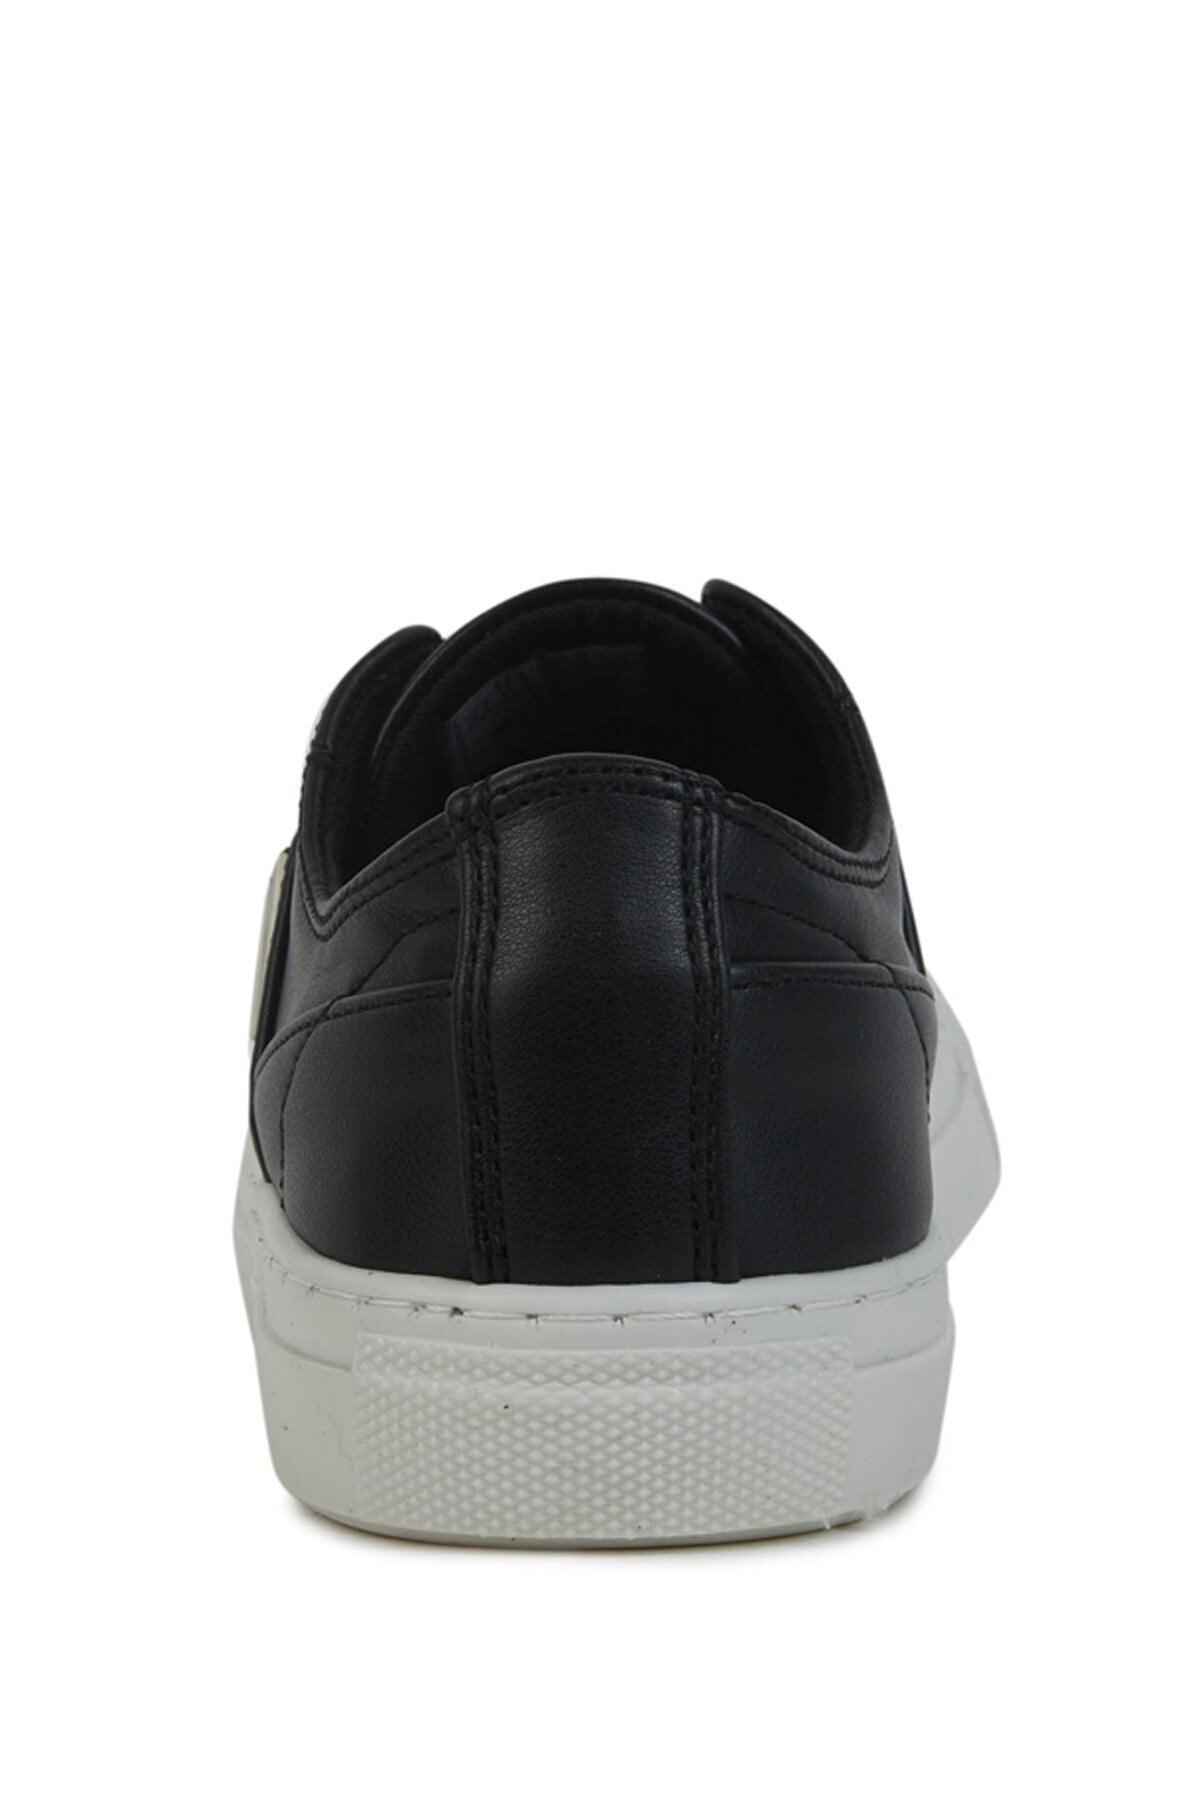 Black - Pranze5 Women's Sneaker Shoes - Swordslife